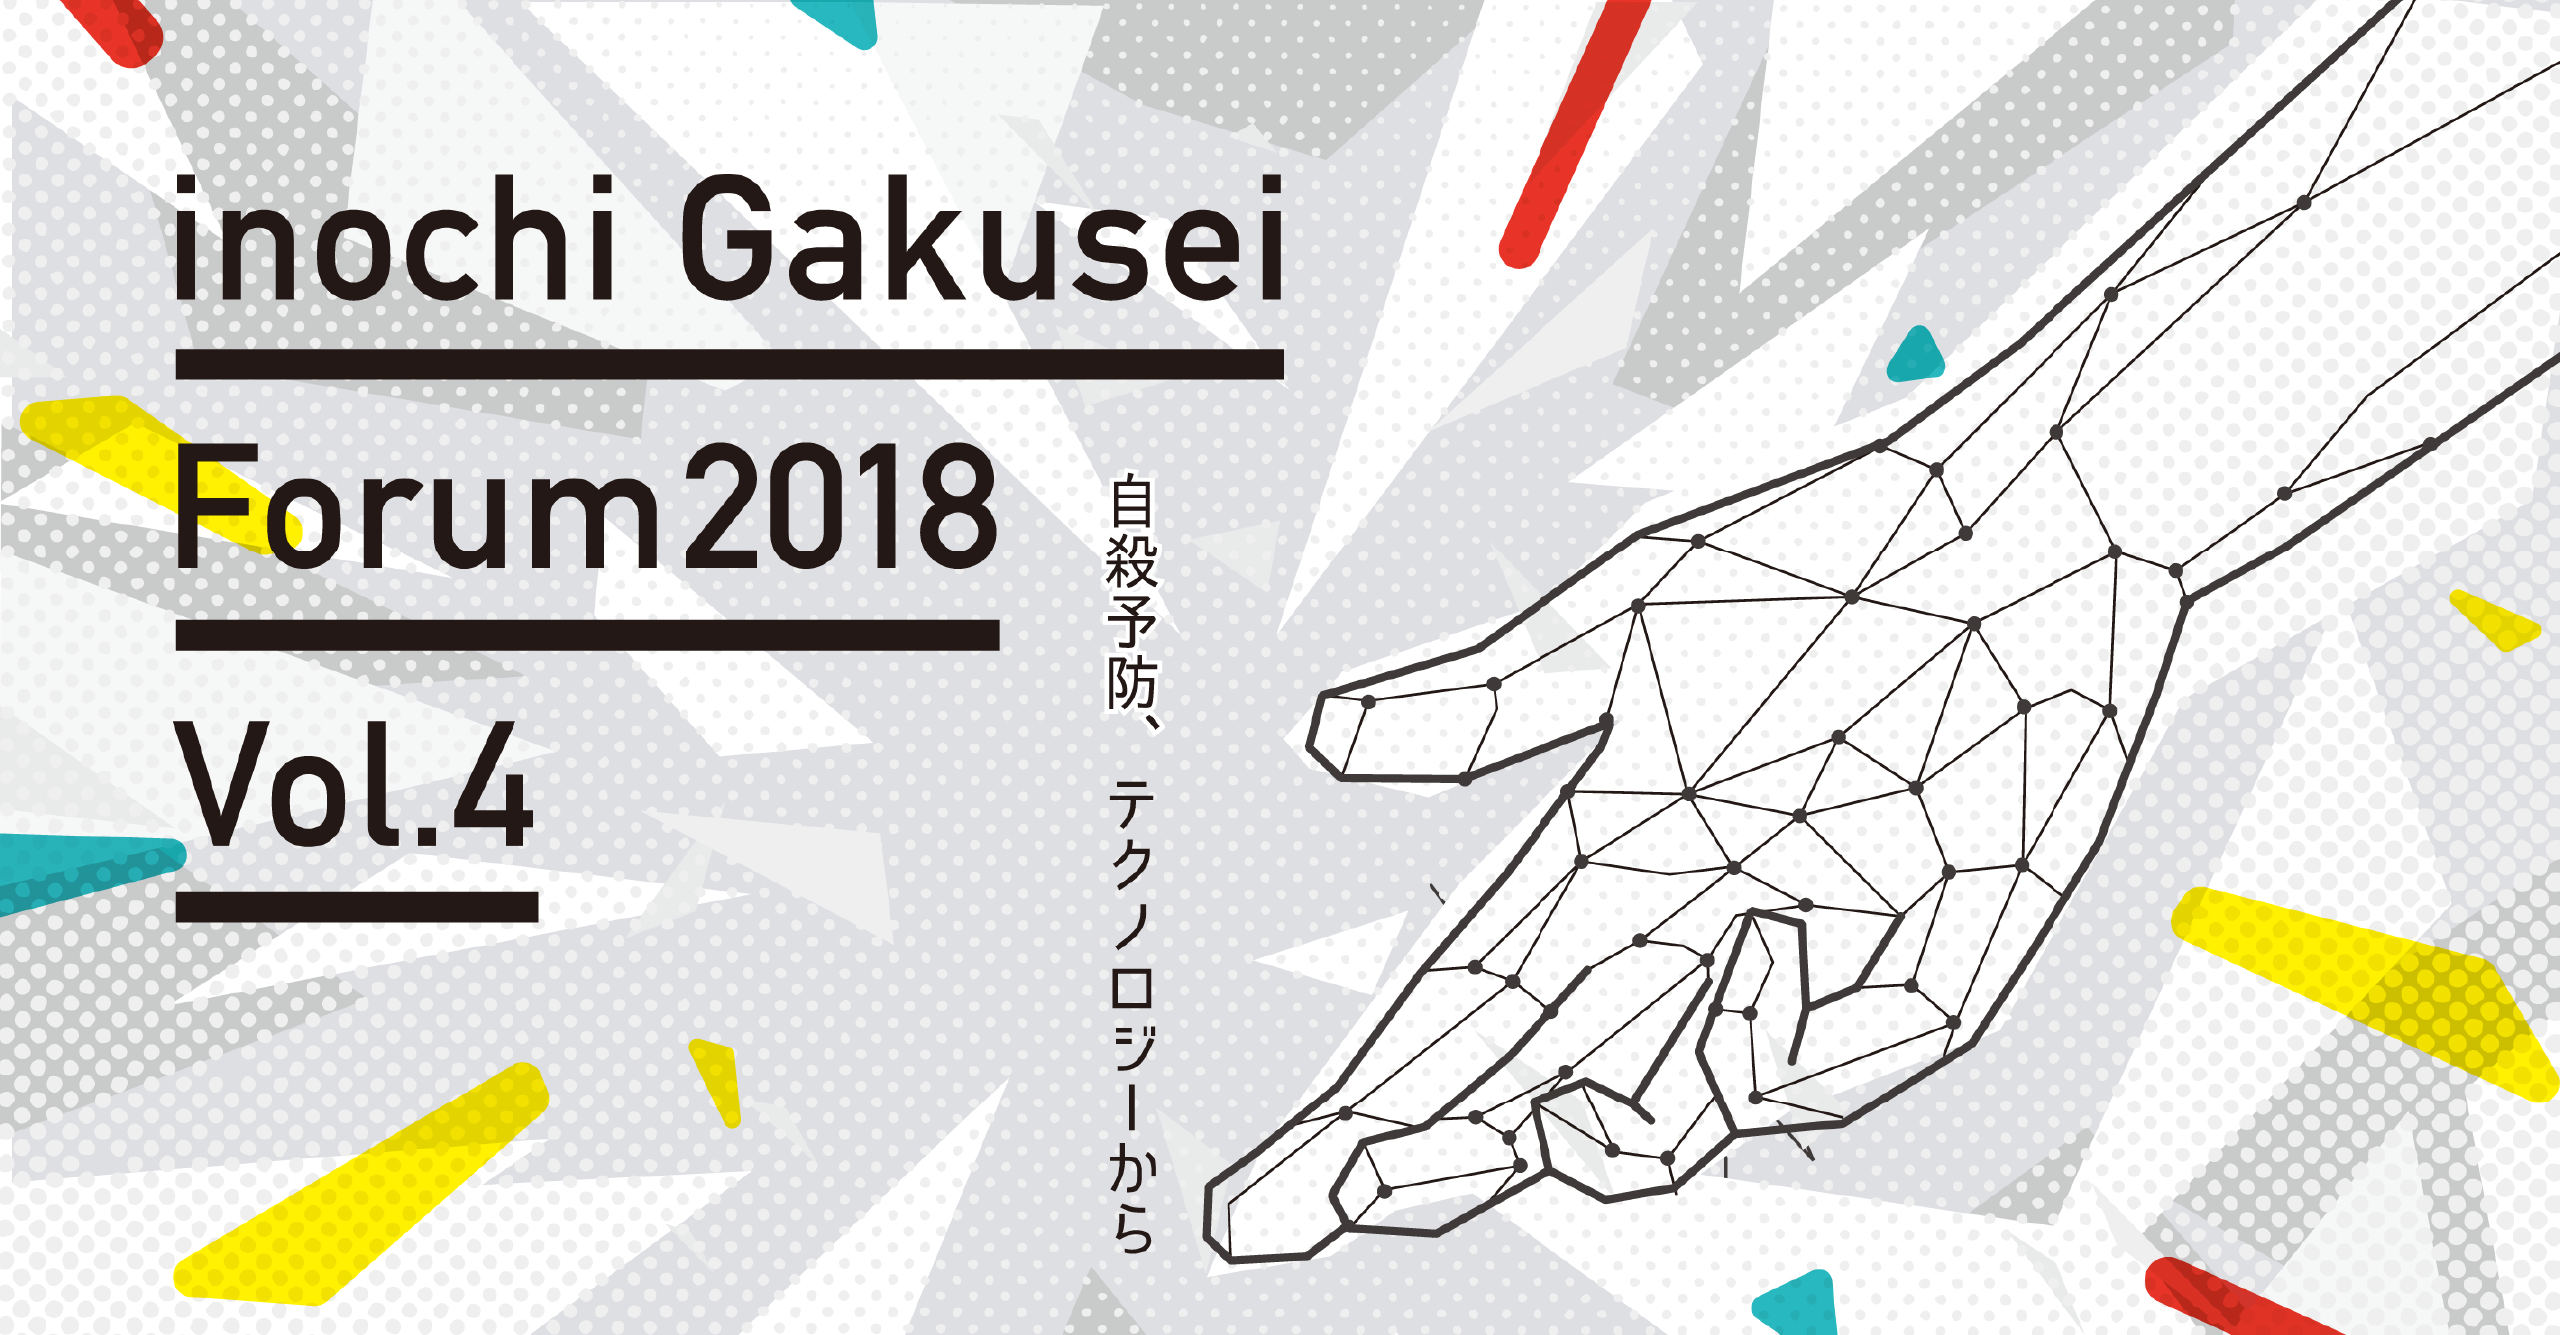 inochi Gakusei Forum 2018